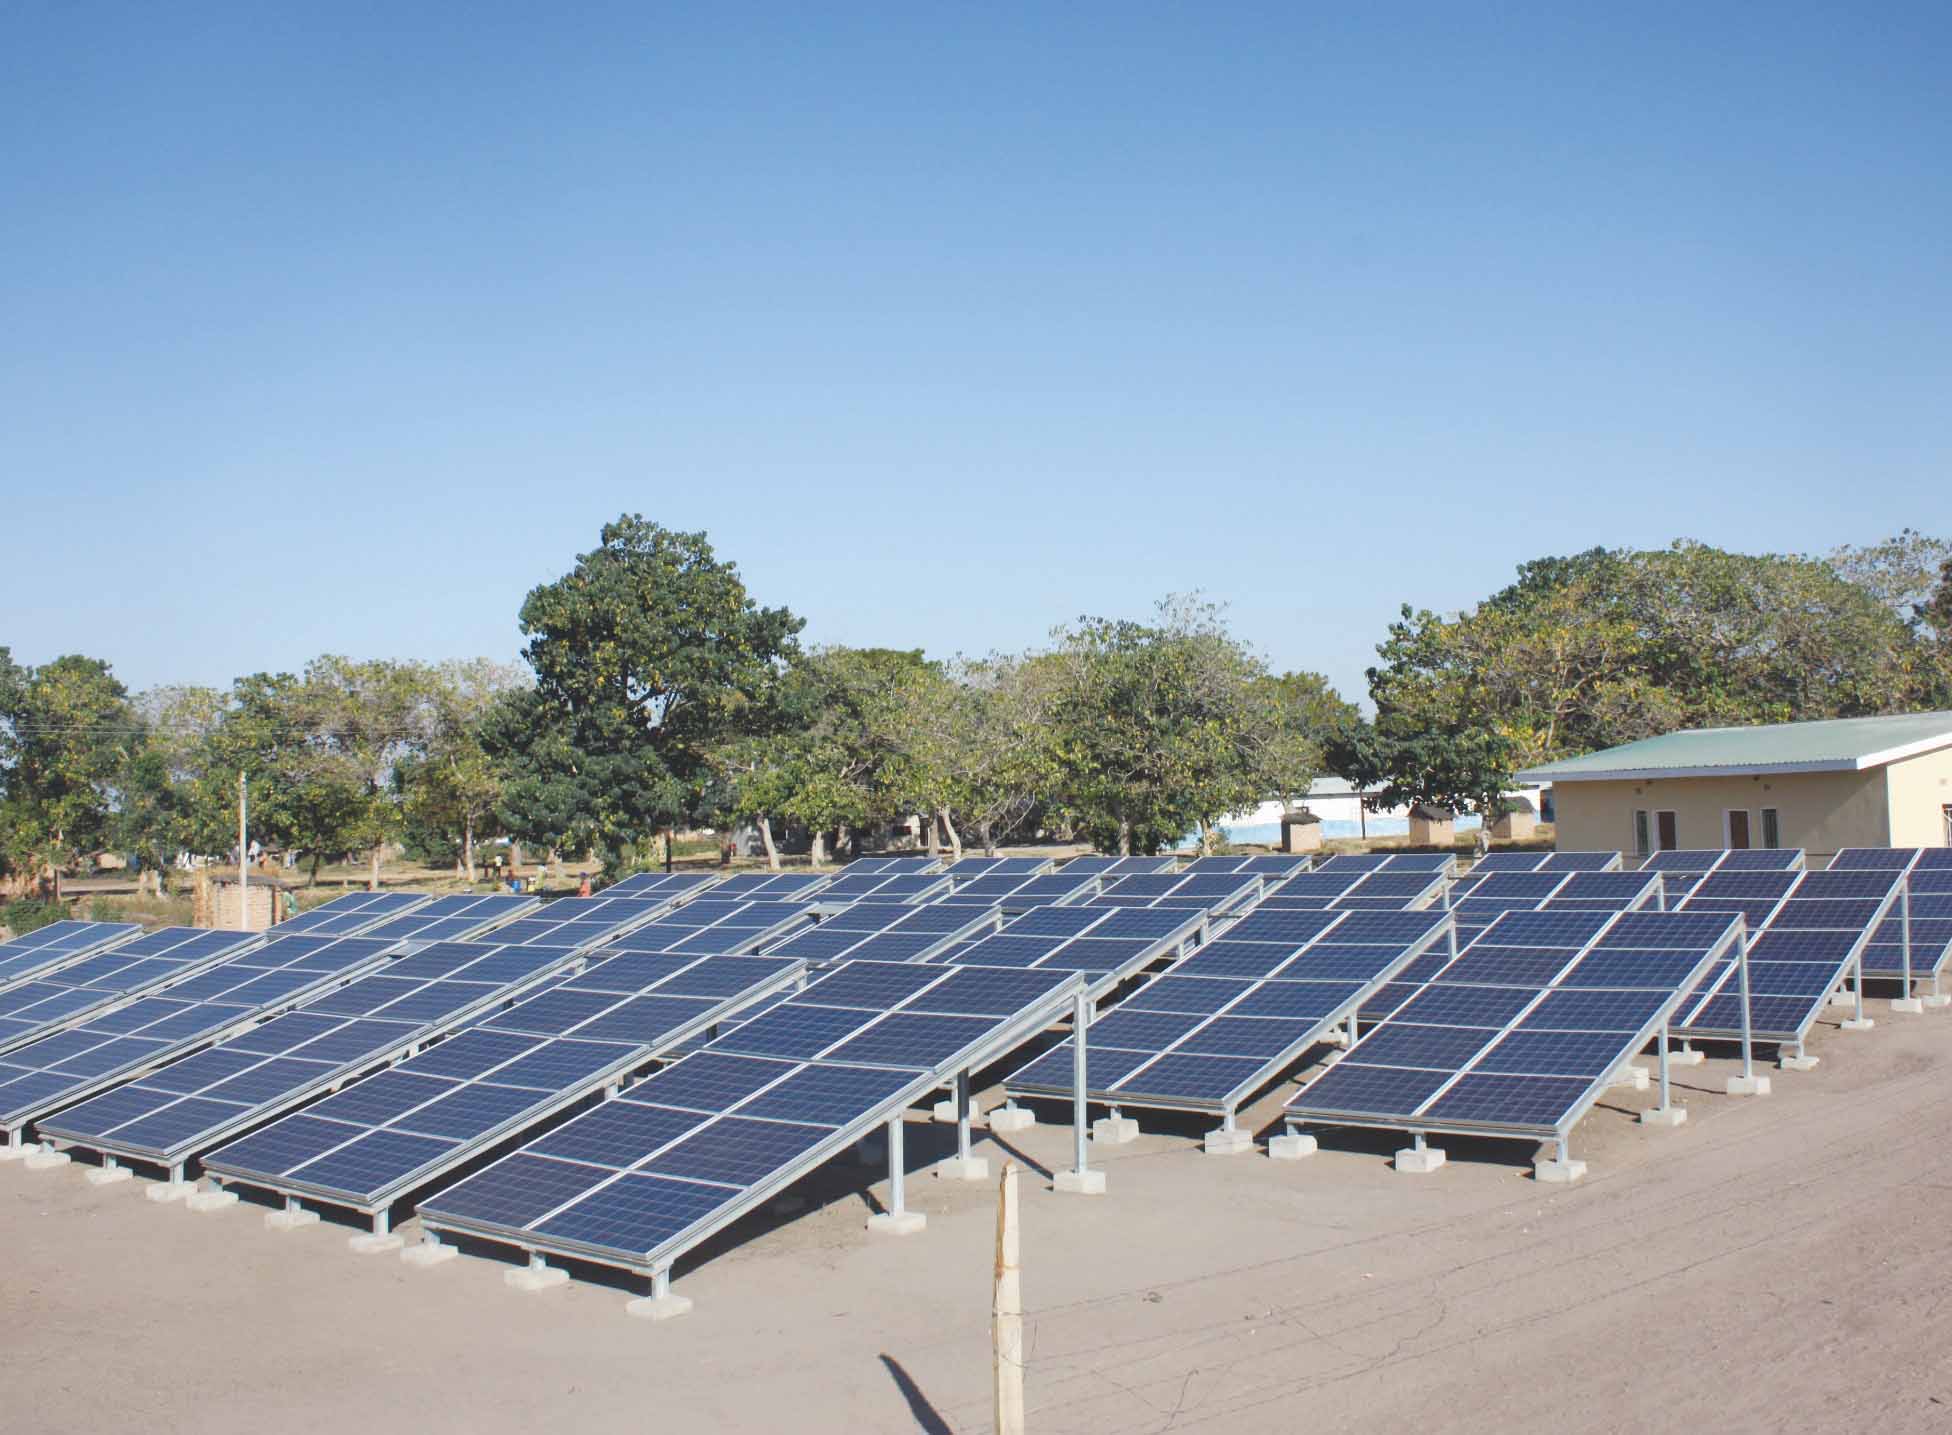 South Africa's Sun Exchange, Powerhive to power rural Kenya